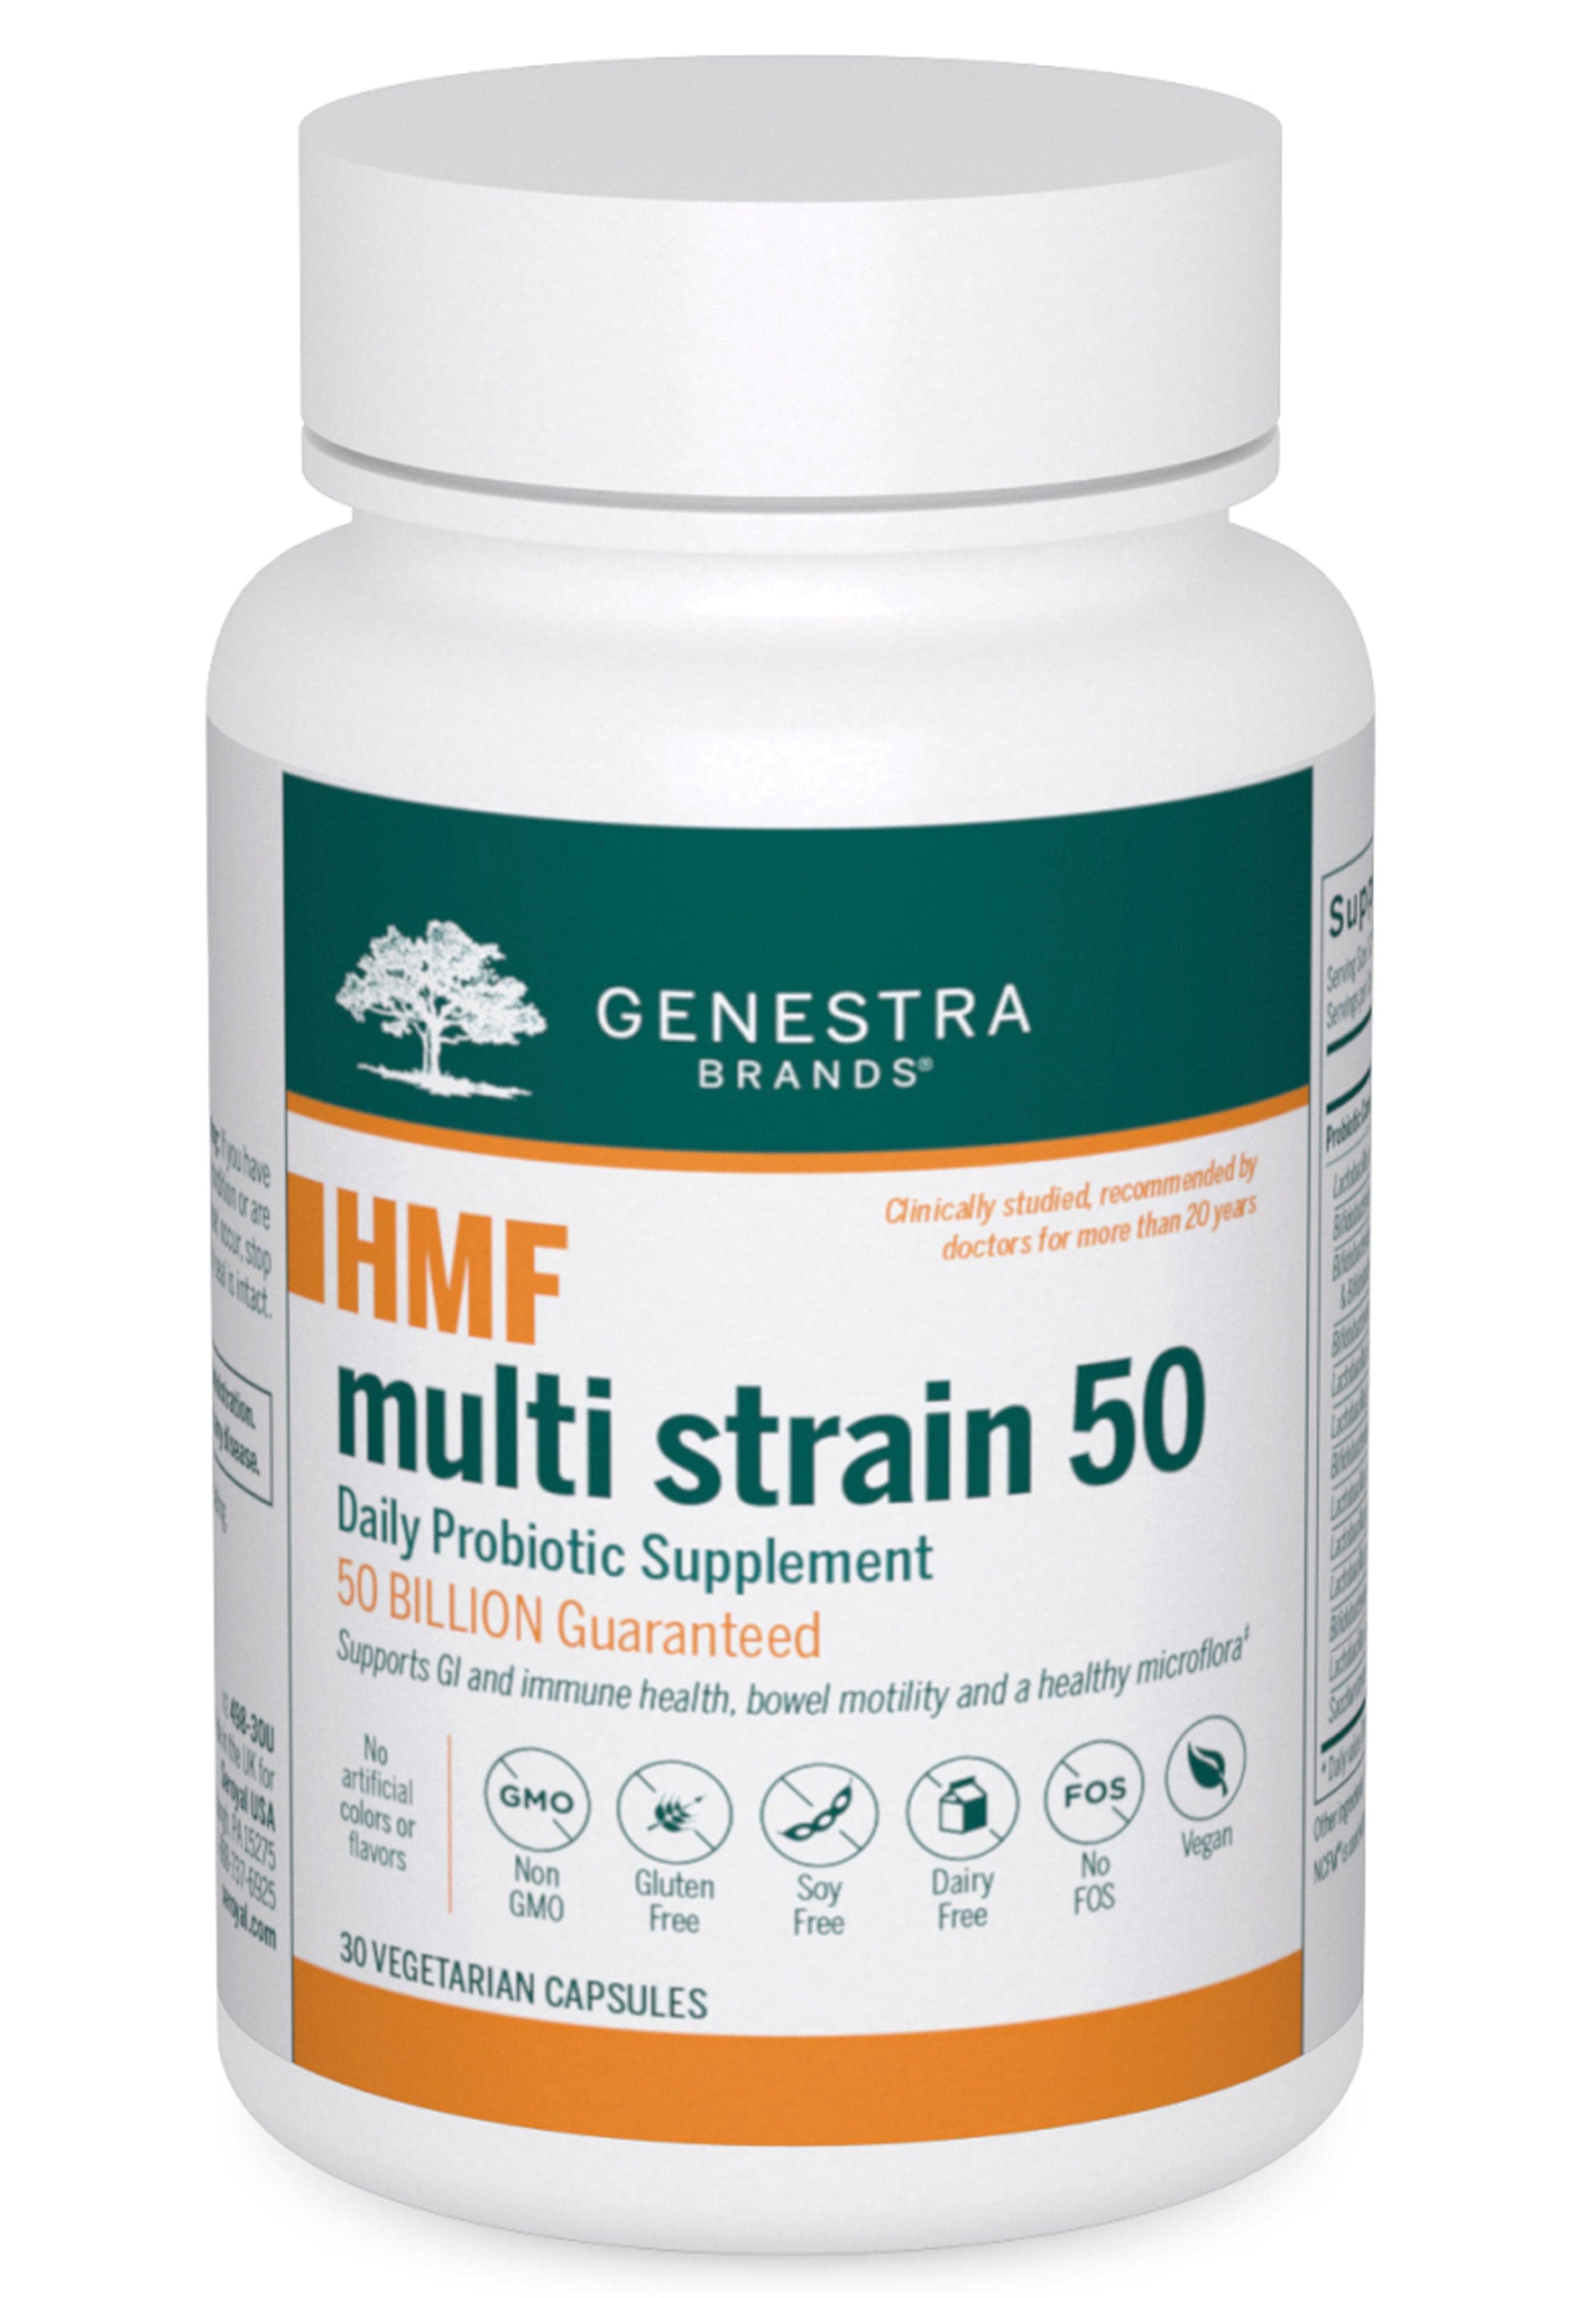 Genestra Brands HMF Multi Strain 50